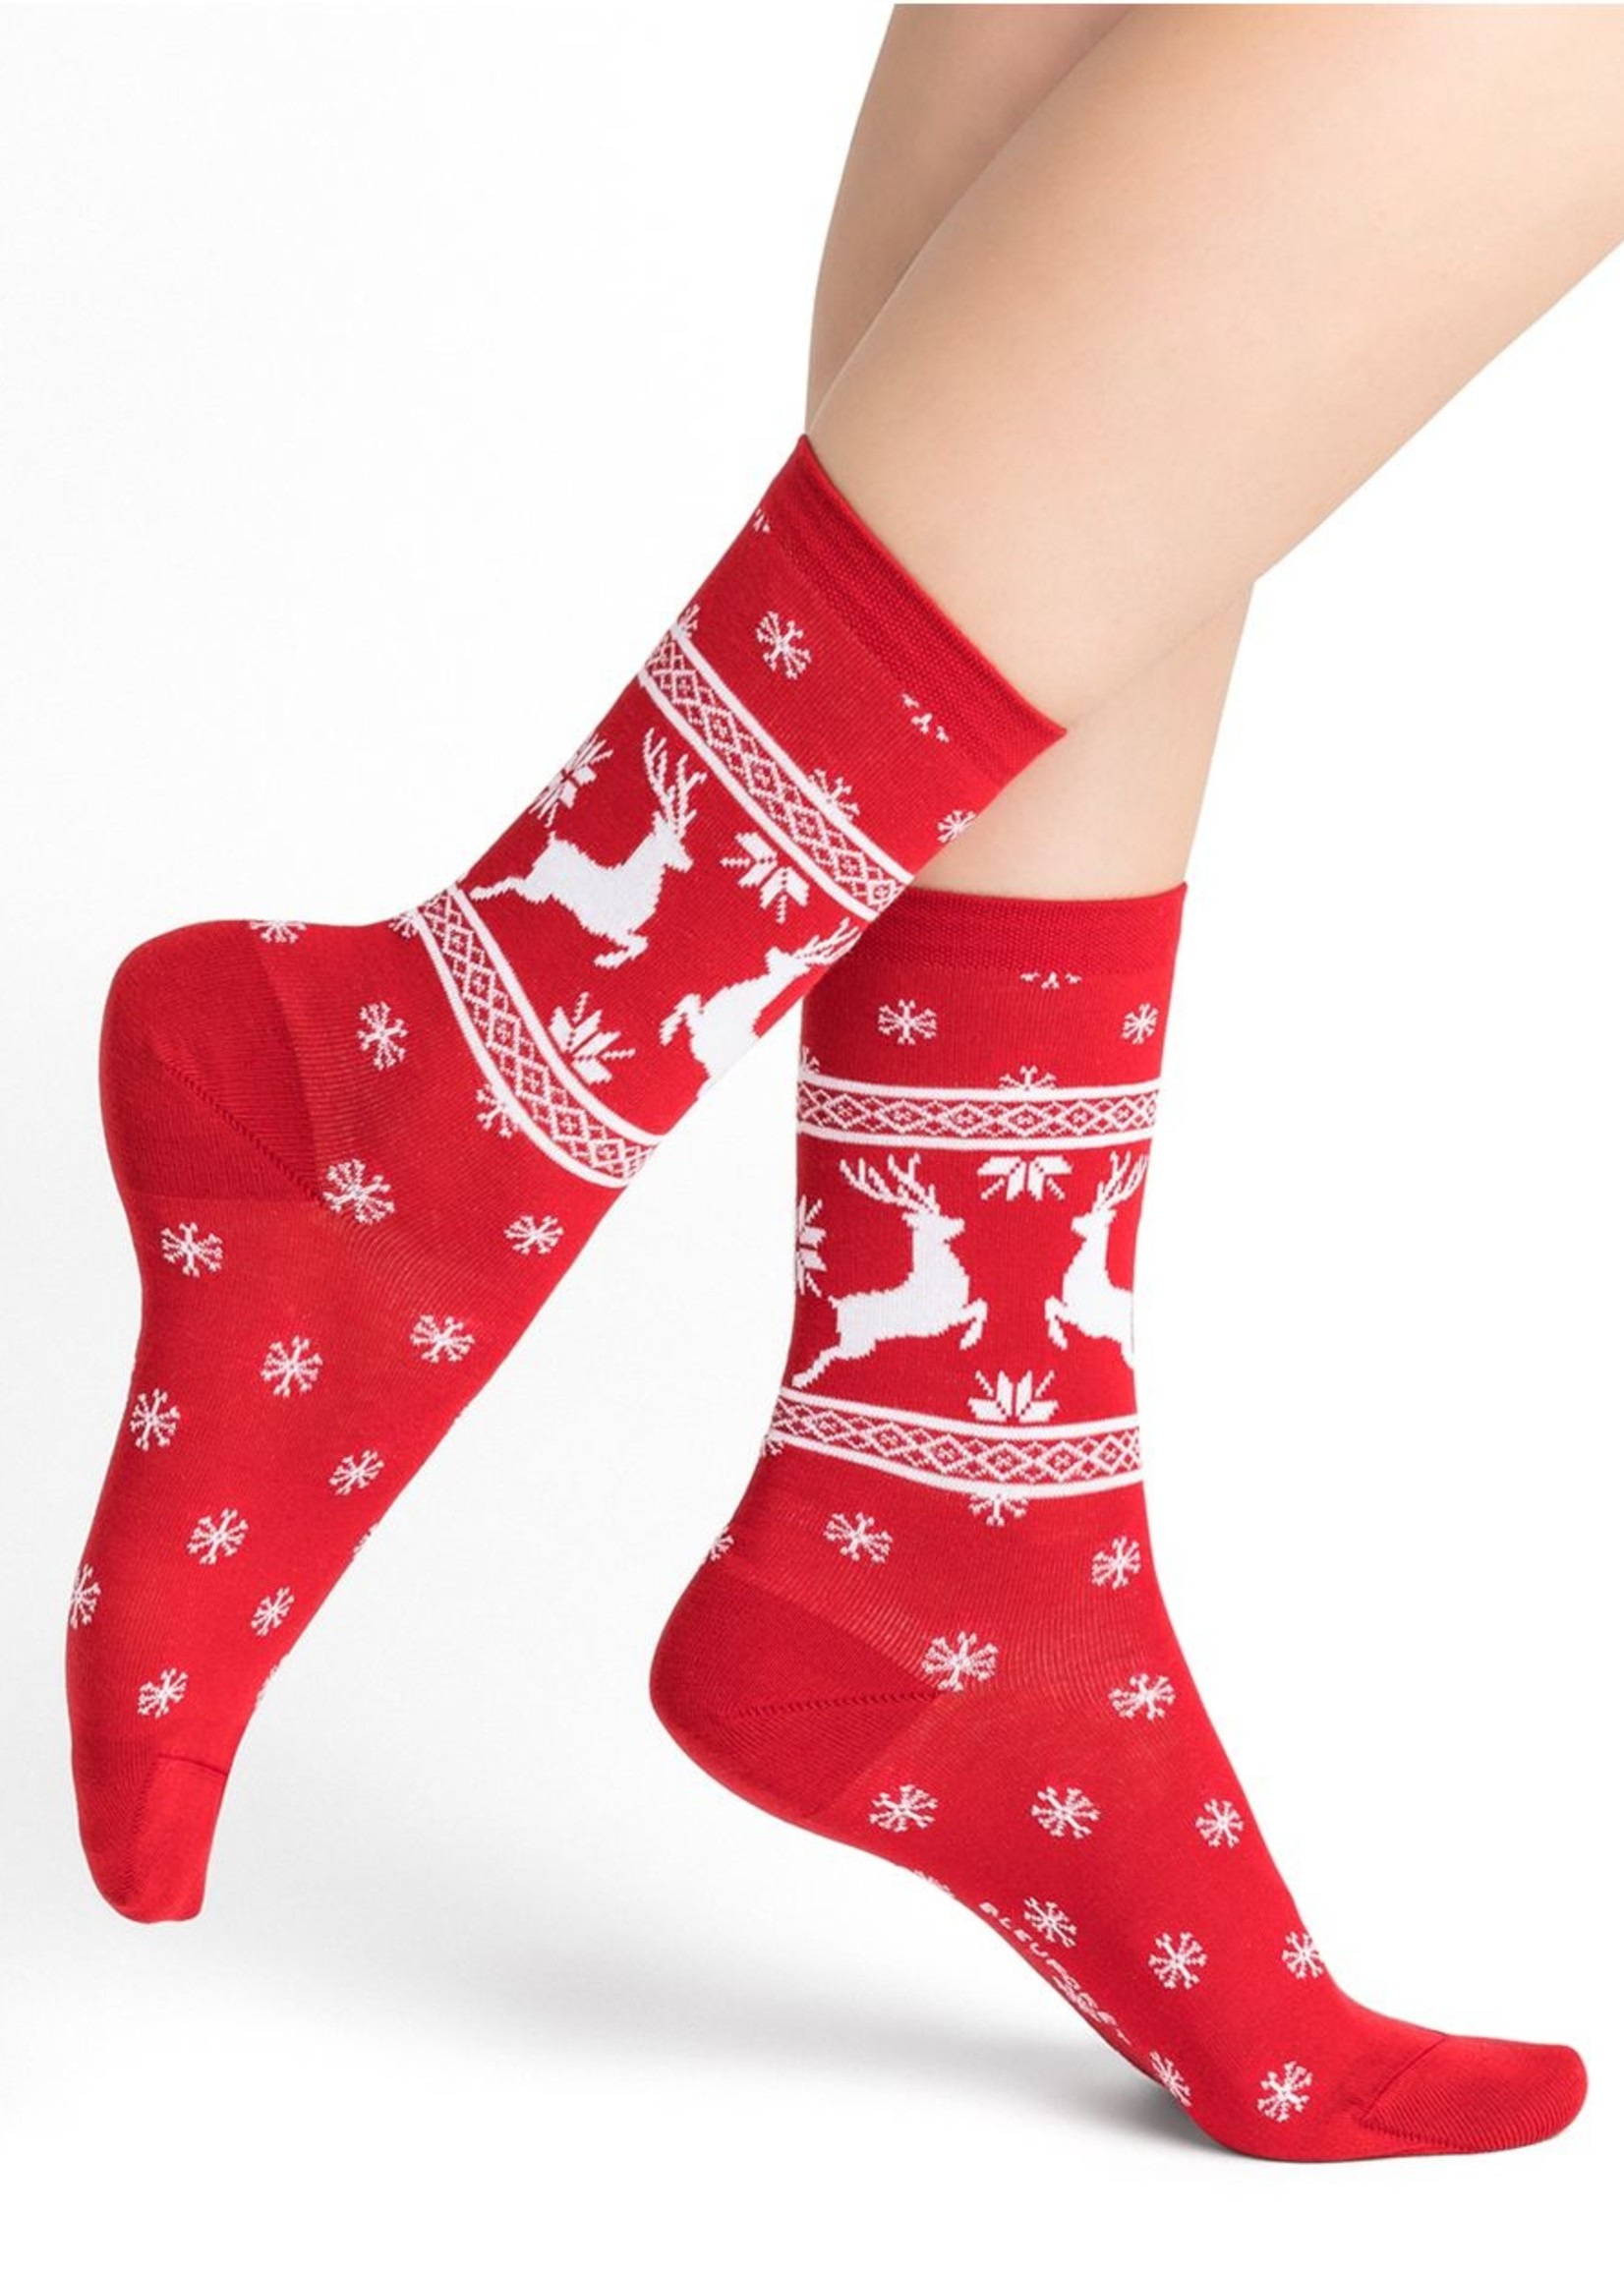 Bleuforet Cotton Snowflake Christmas Socks